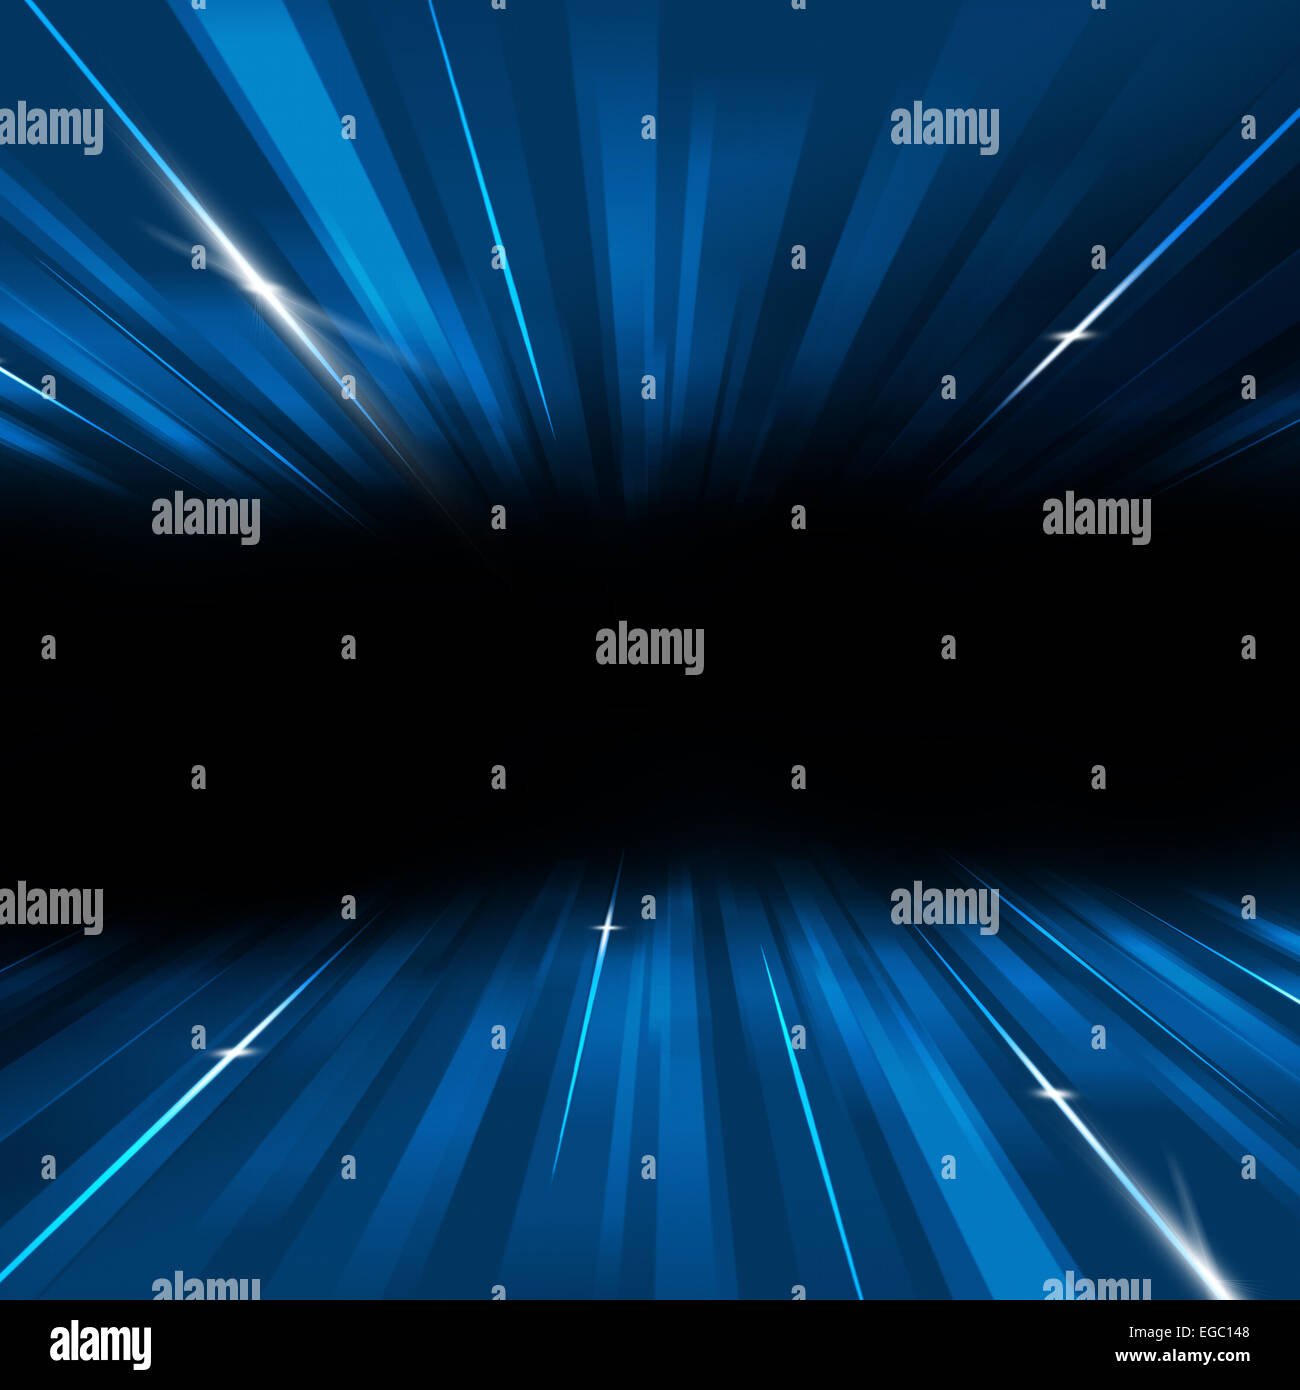 Abstract technology business linee di movimento e luci sfondo blu Foto Stock